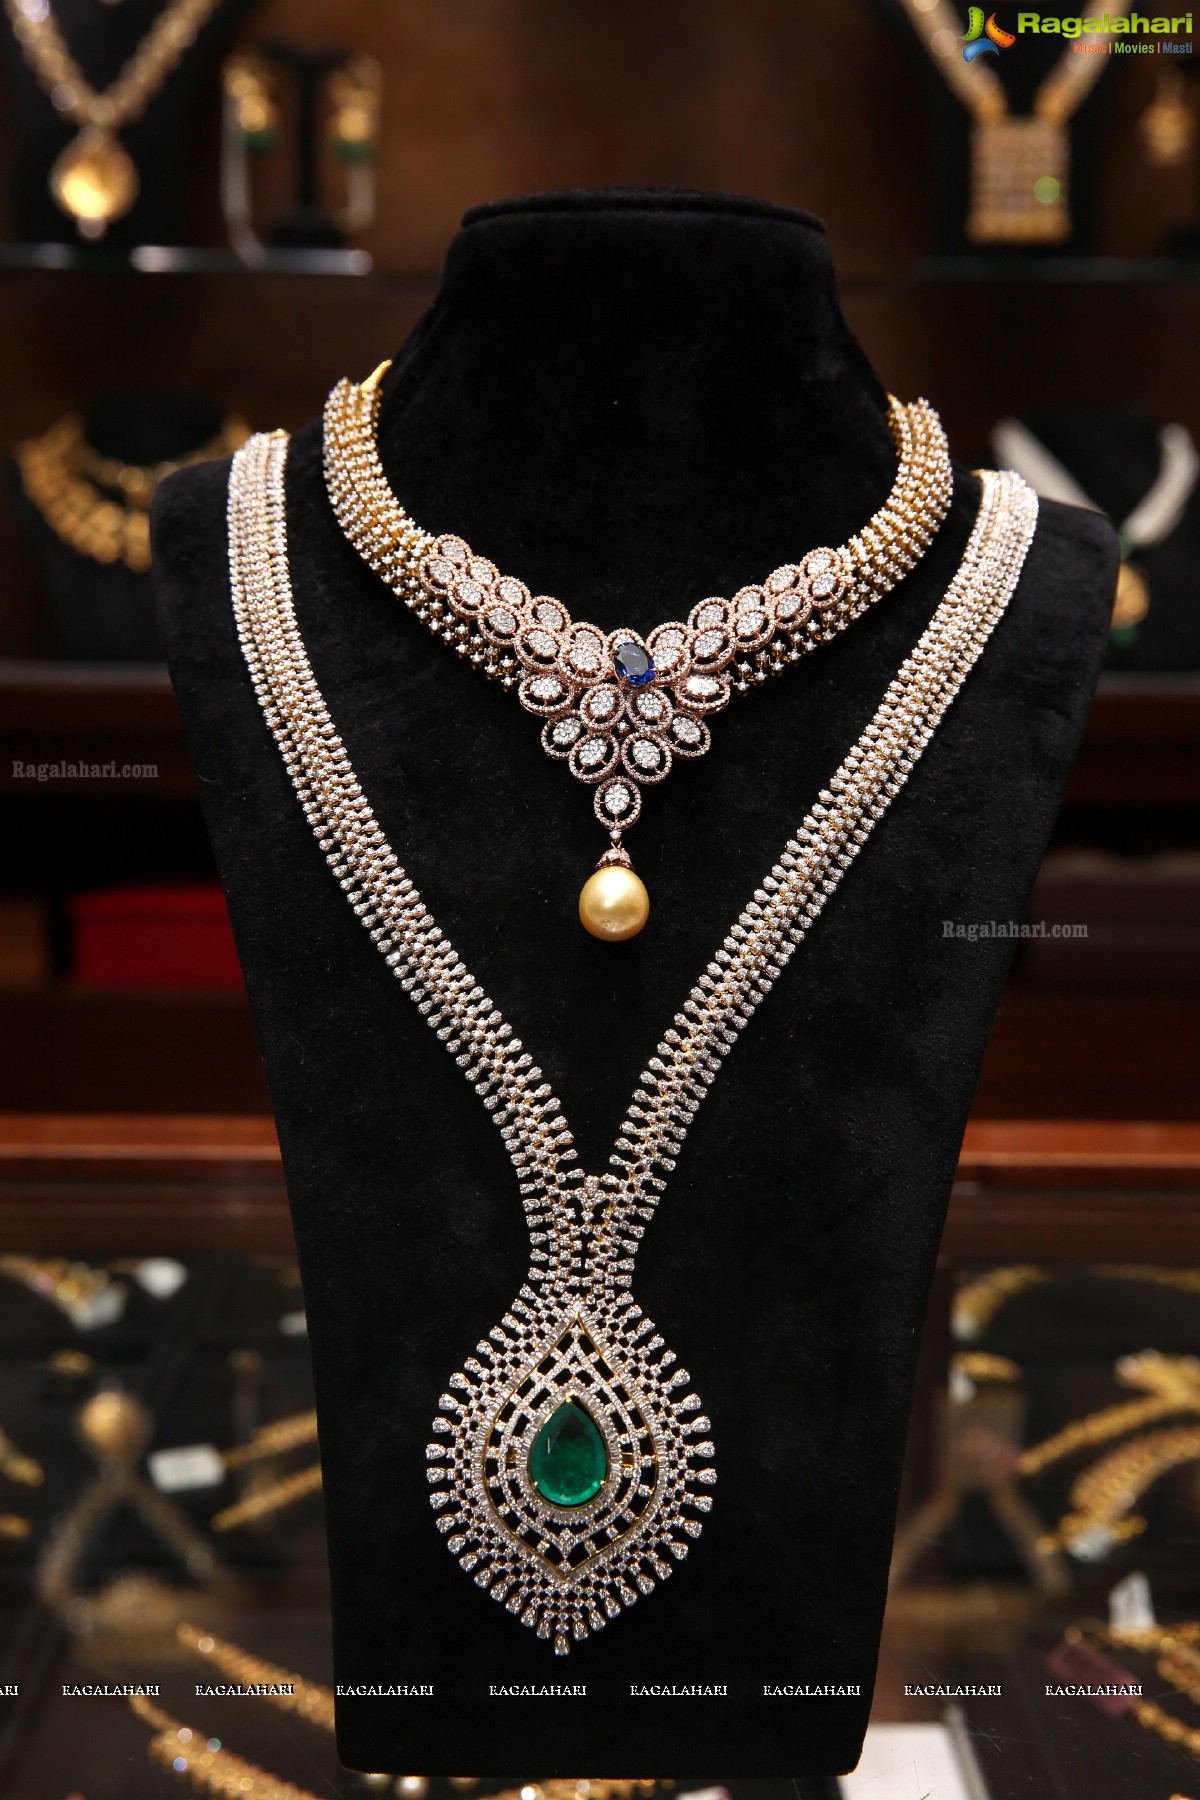 Malabar Gold & Diamonds Branded Jewellery Show 